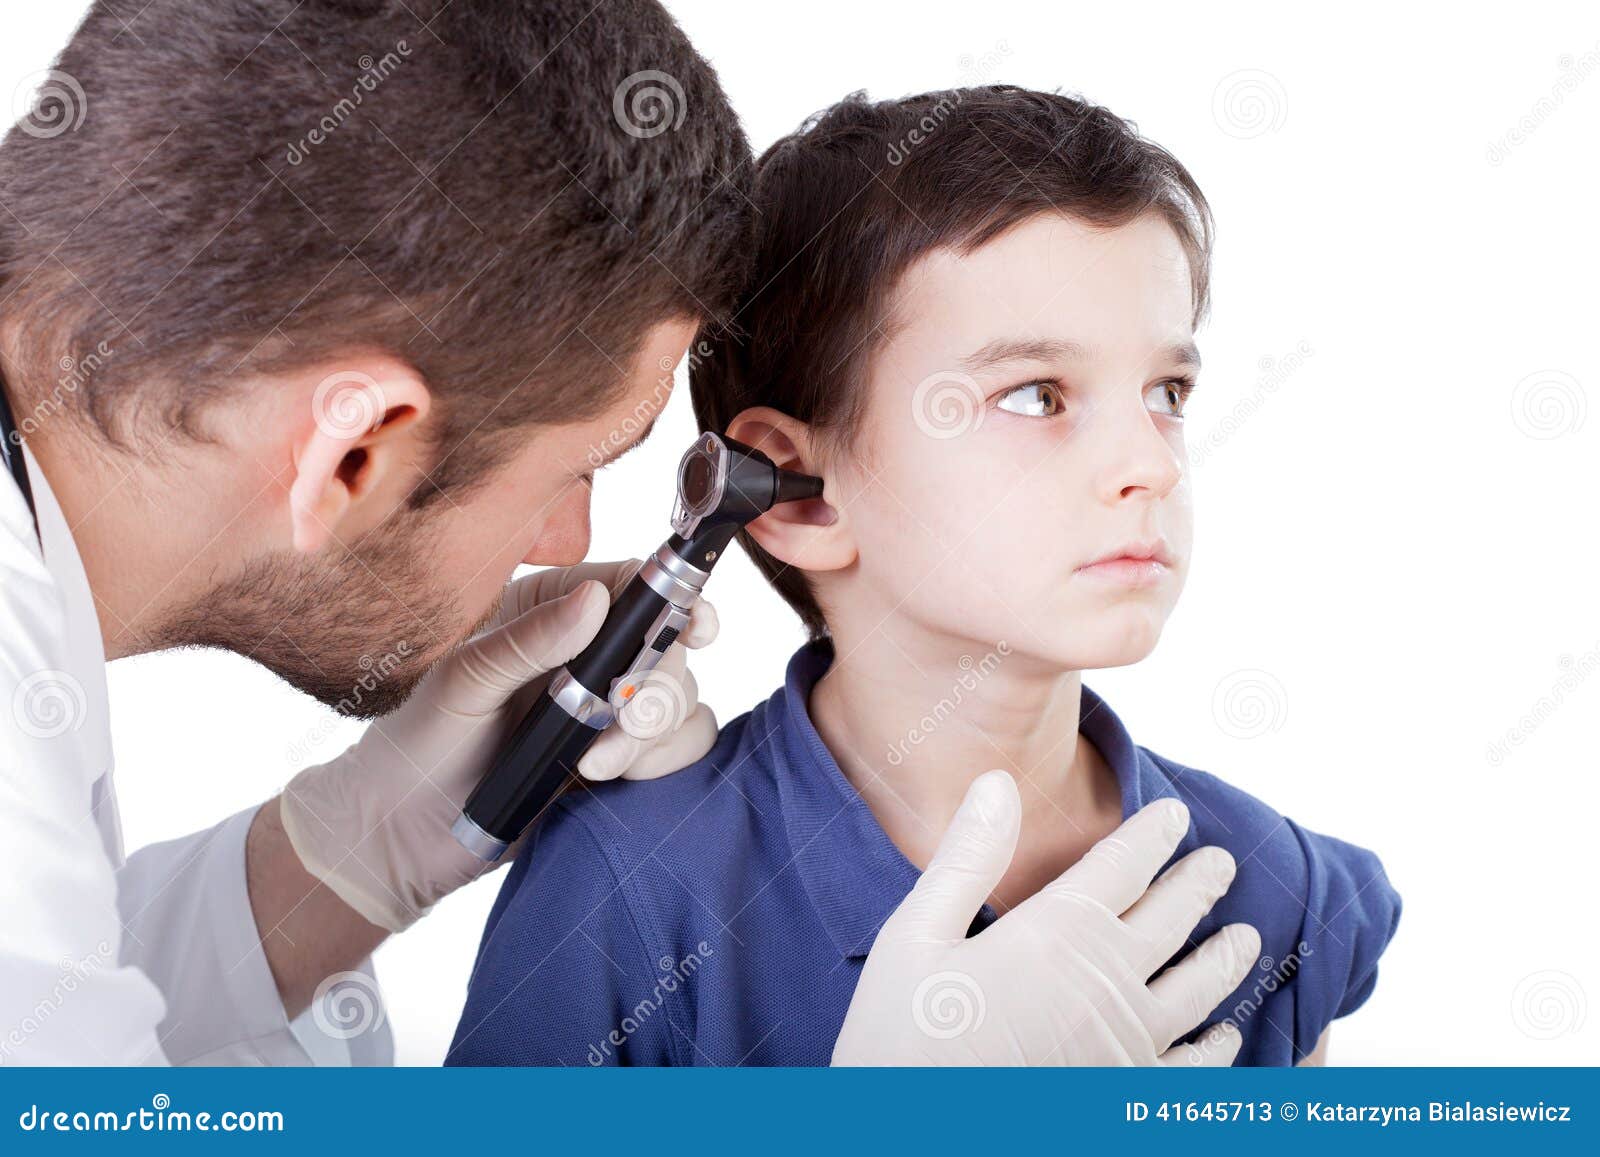 Eye Ear And Throat Doctor 46